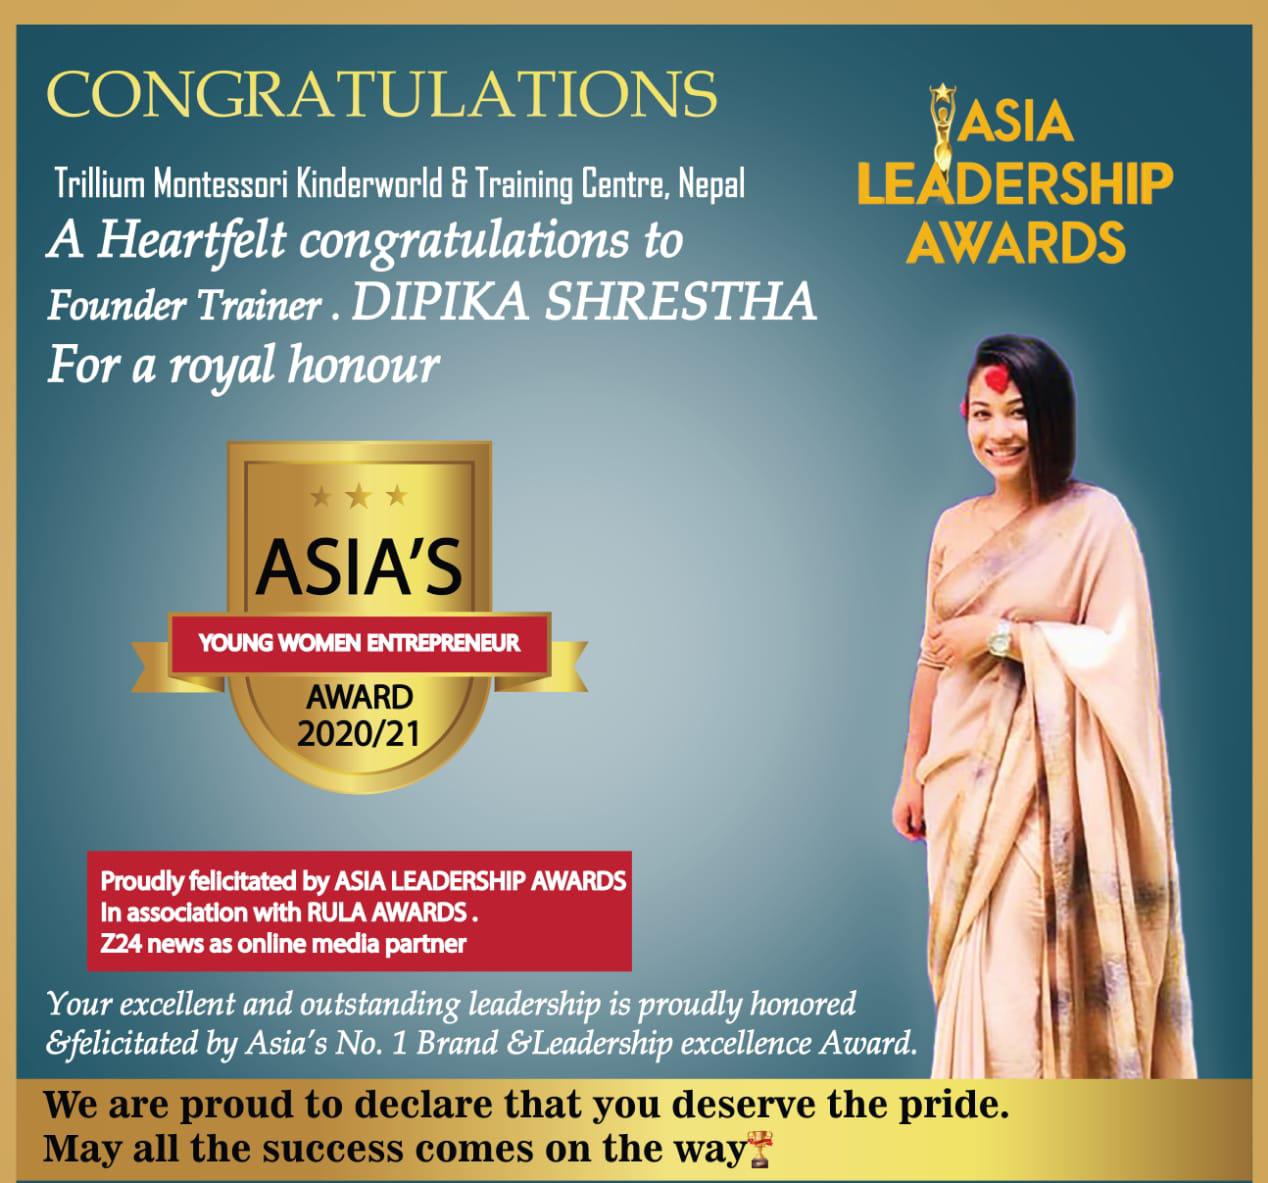 Dipika Shrestha has bagged Asia's Young Women Entrepreneur Award